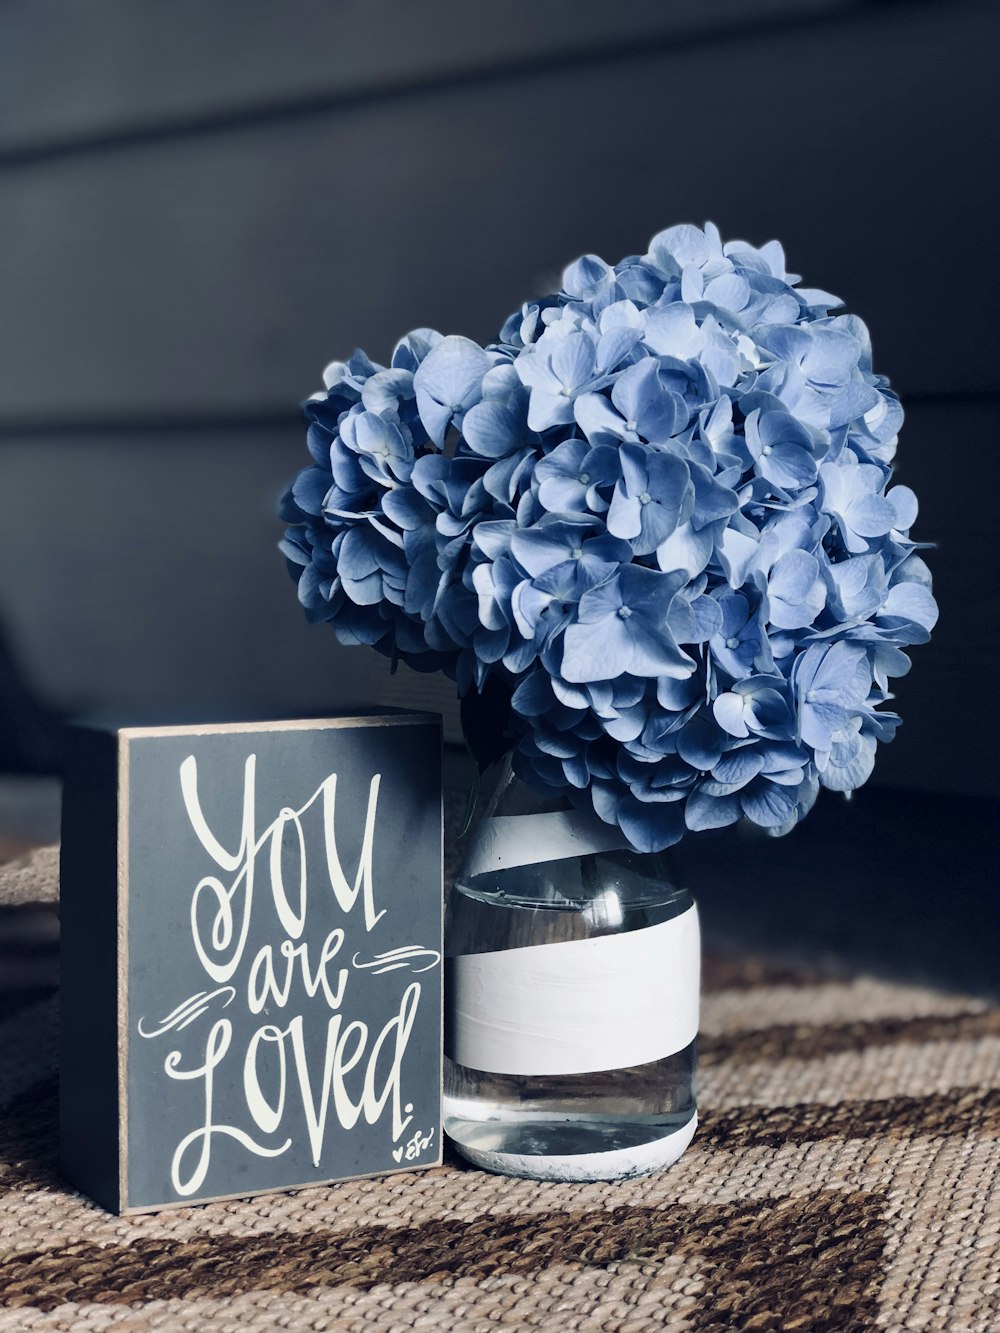 blue flowers in glass vase